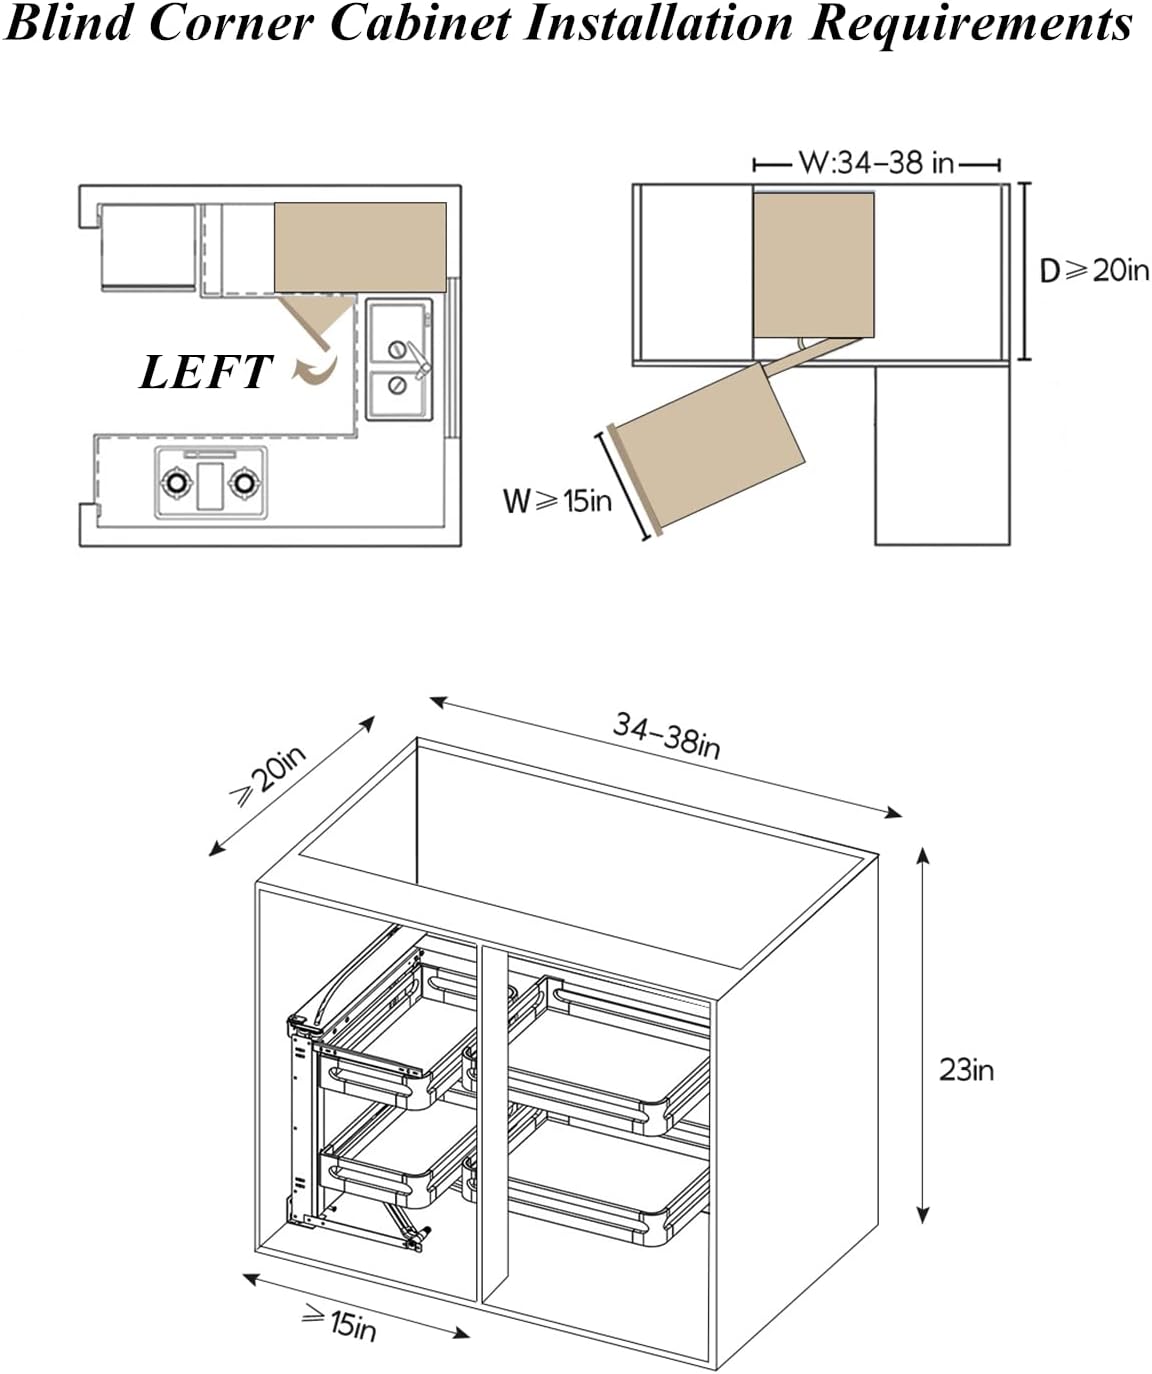 HFWYJF Blind Corner Cabinet Pull Out Organizer installation requirements